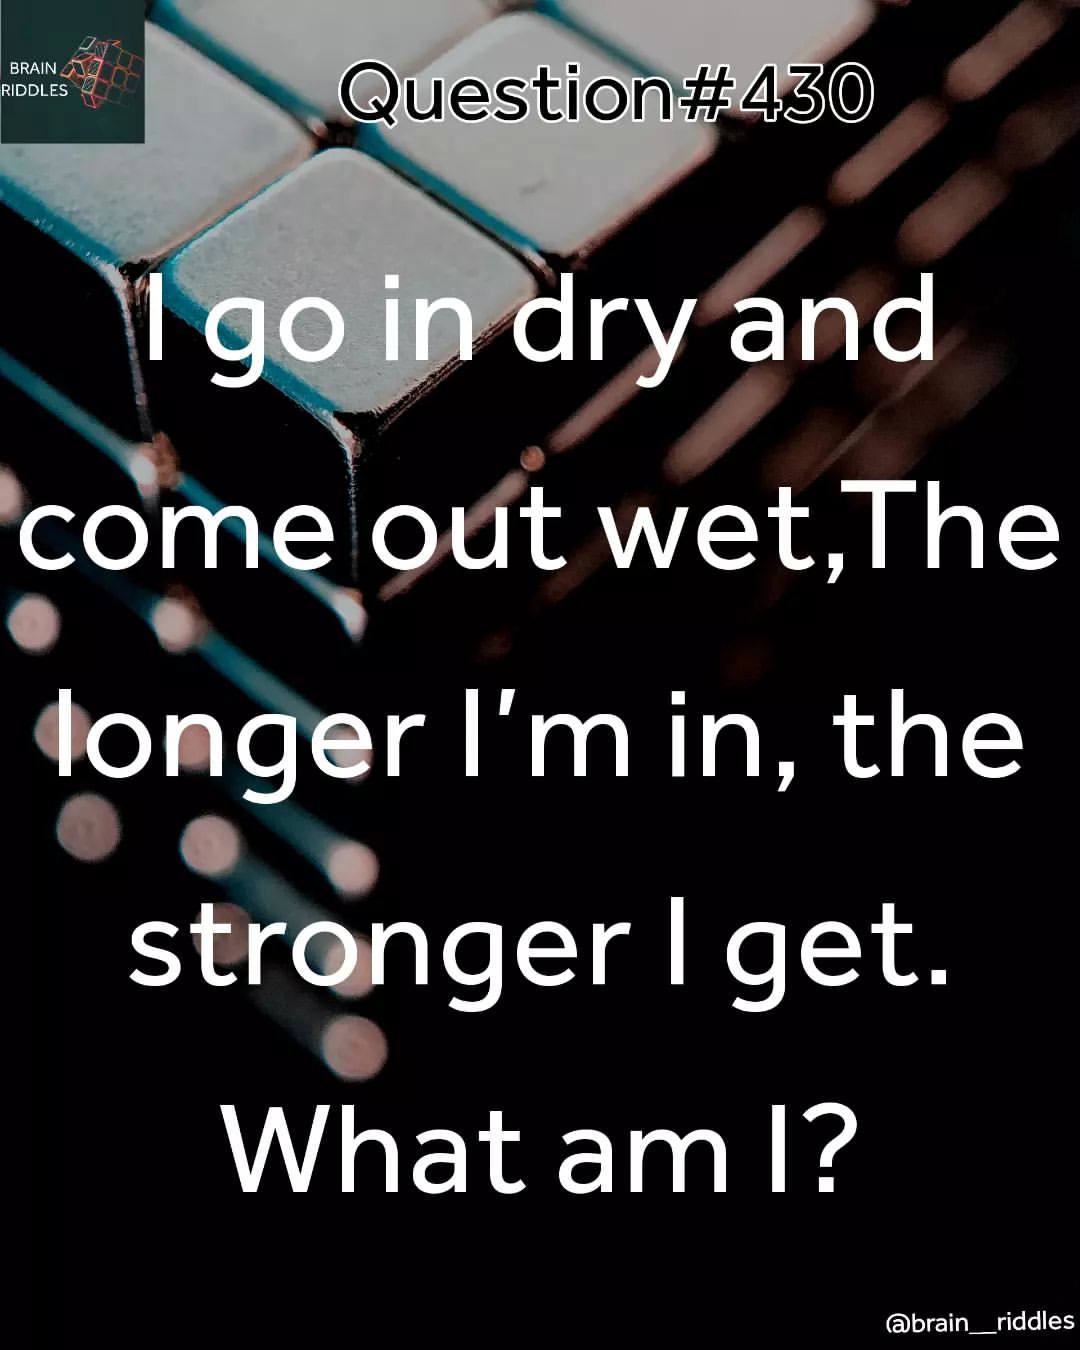 I go in dry and come out wet, the longer I'm in, the stronger I get. What am I?